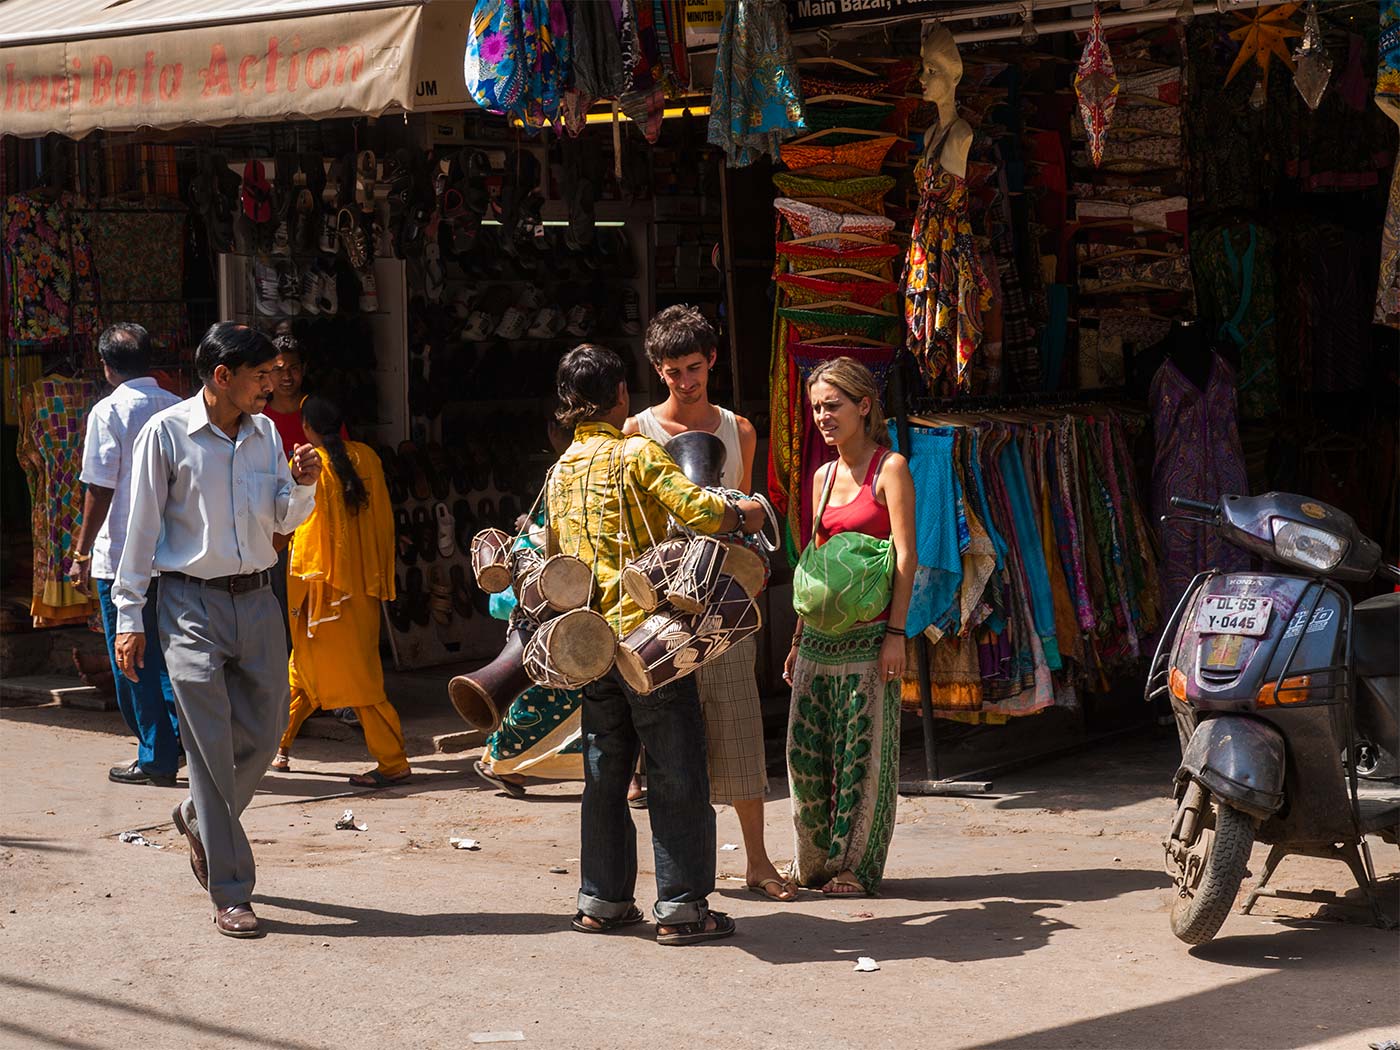 Paharganj District - Main Bazaar | Happymind Travels